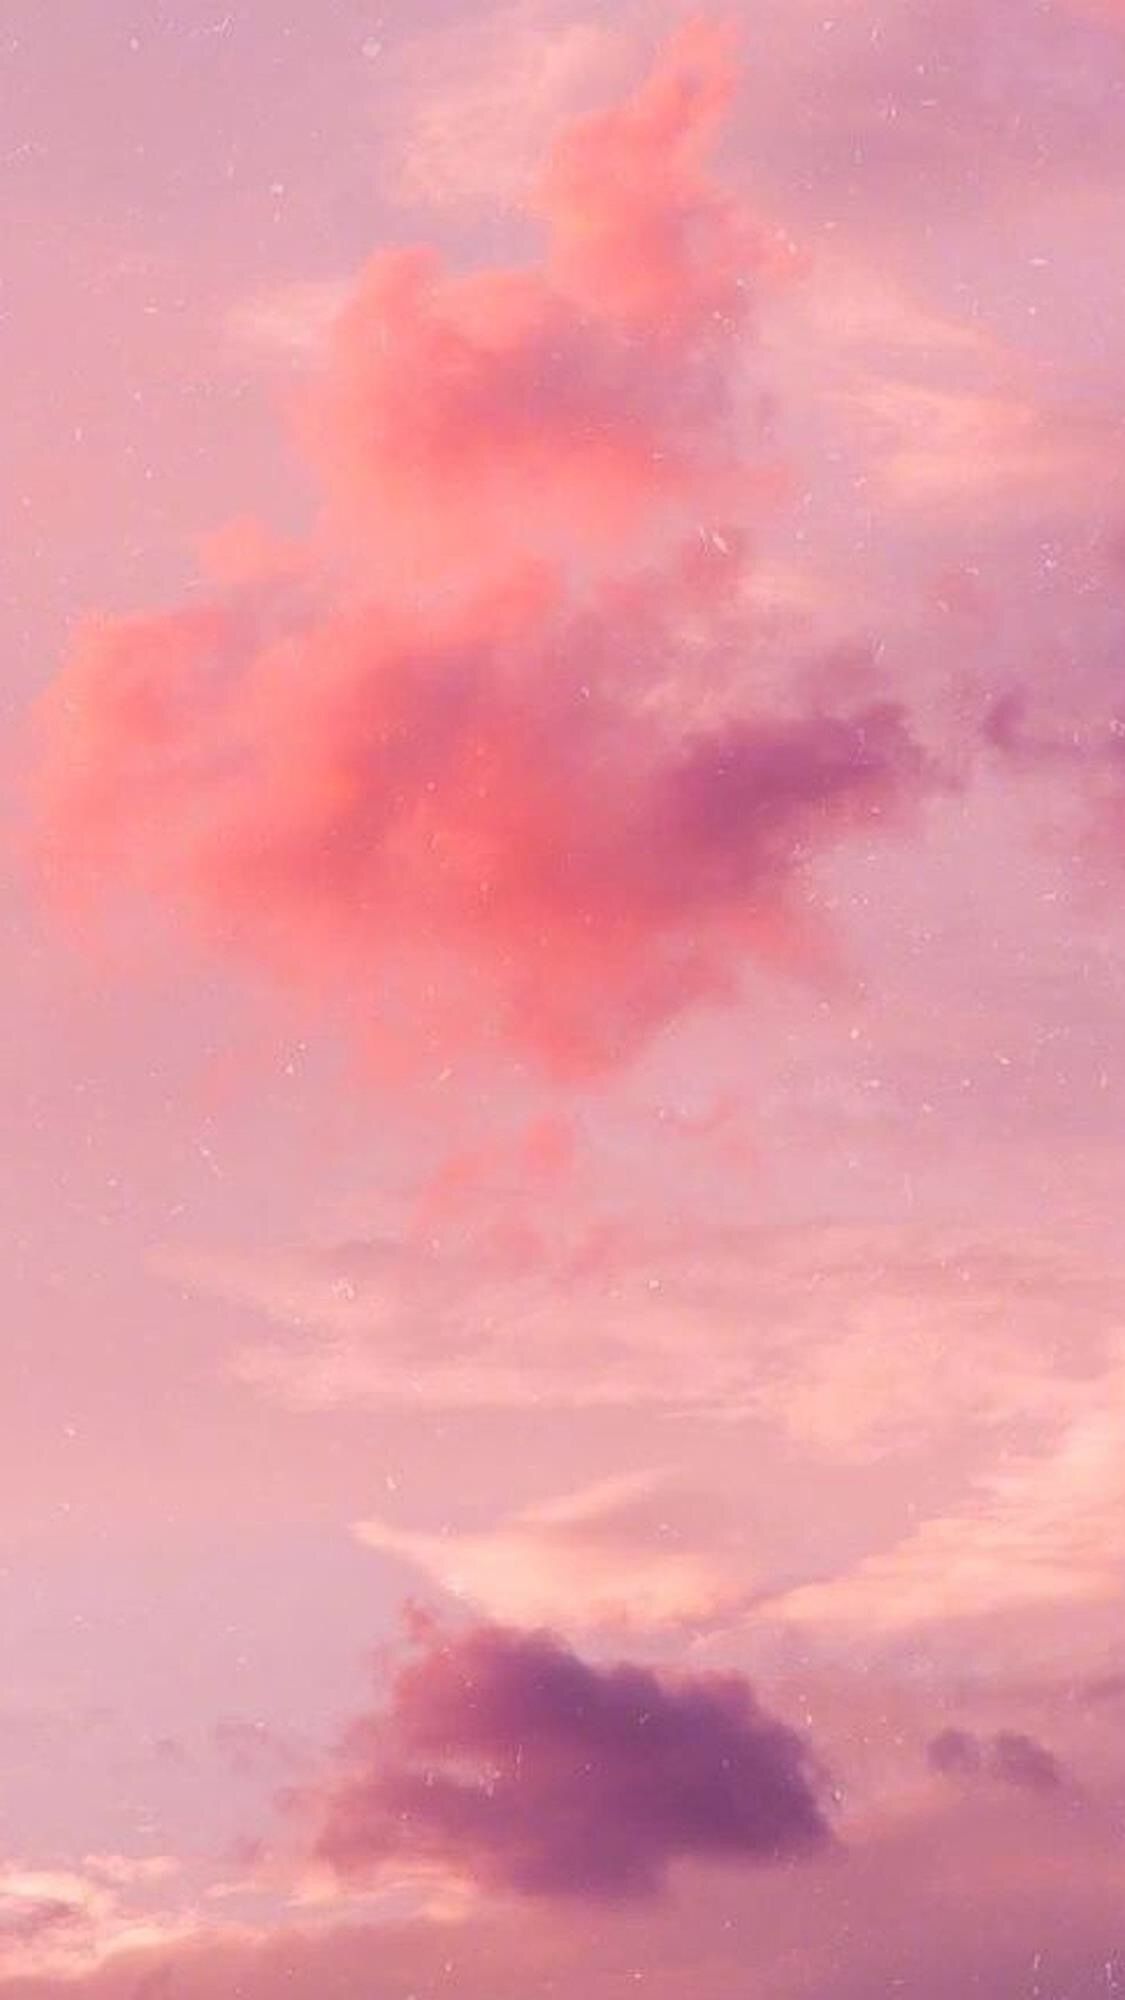 Morandi Color Wallpaper iphone. Color wallpaper iphone, Pink wallpaper iphone, Pink clouds wallpaper